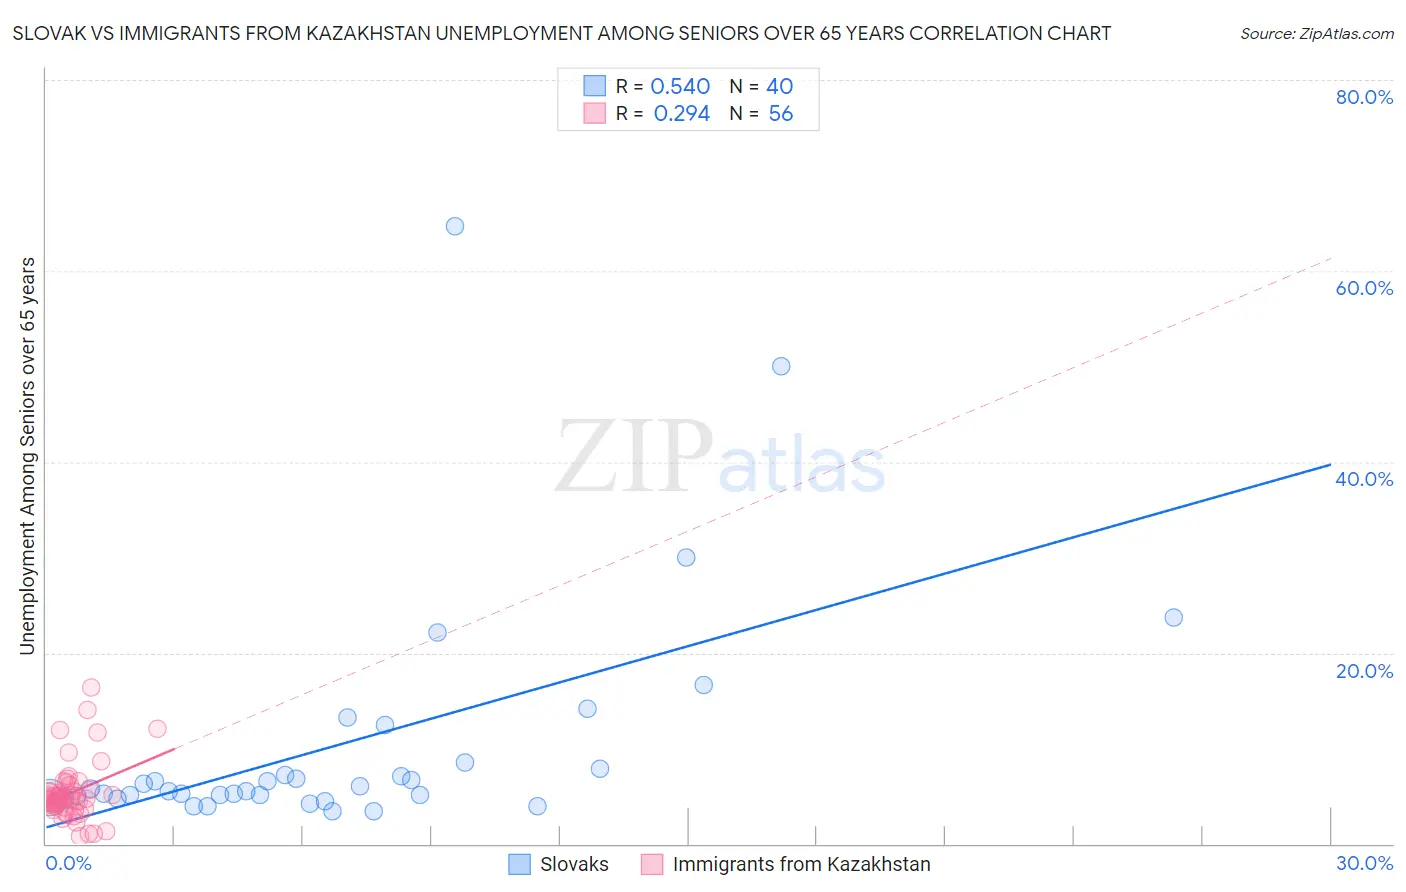 Slovak vs Immigrants from Kazakhstan Unemployment Among Seniors over 65 years